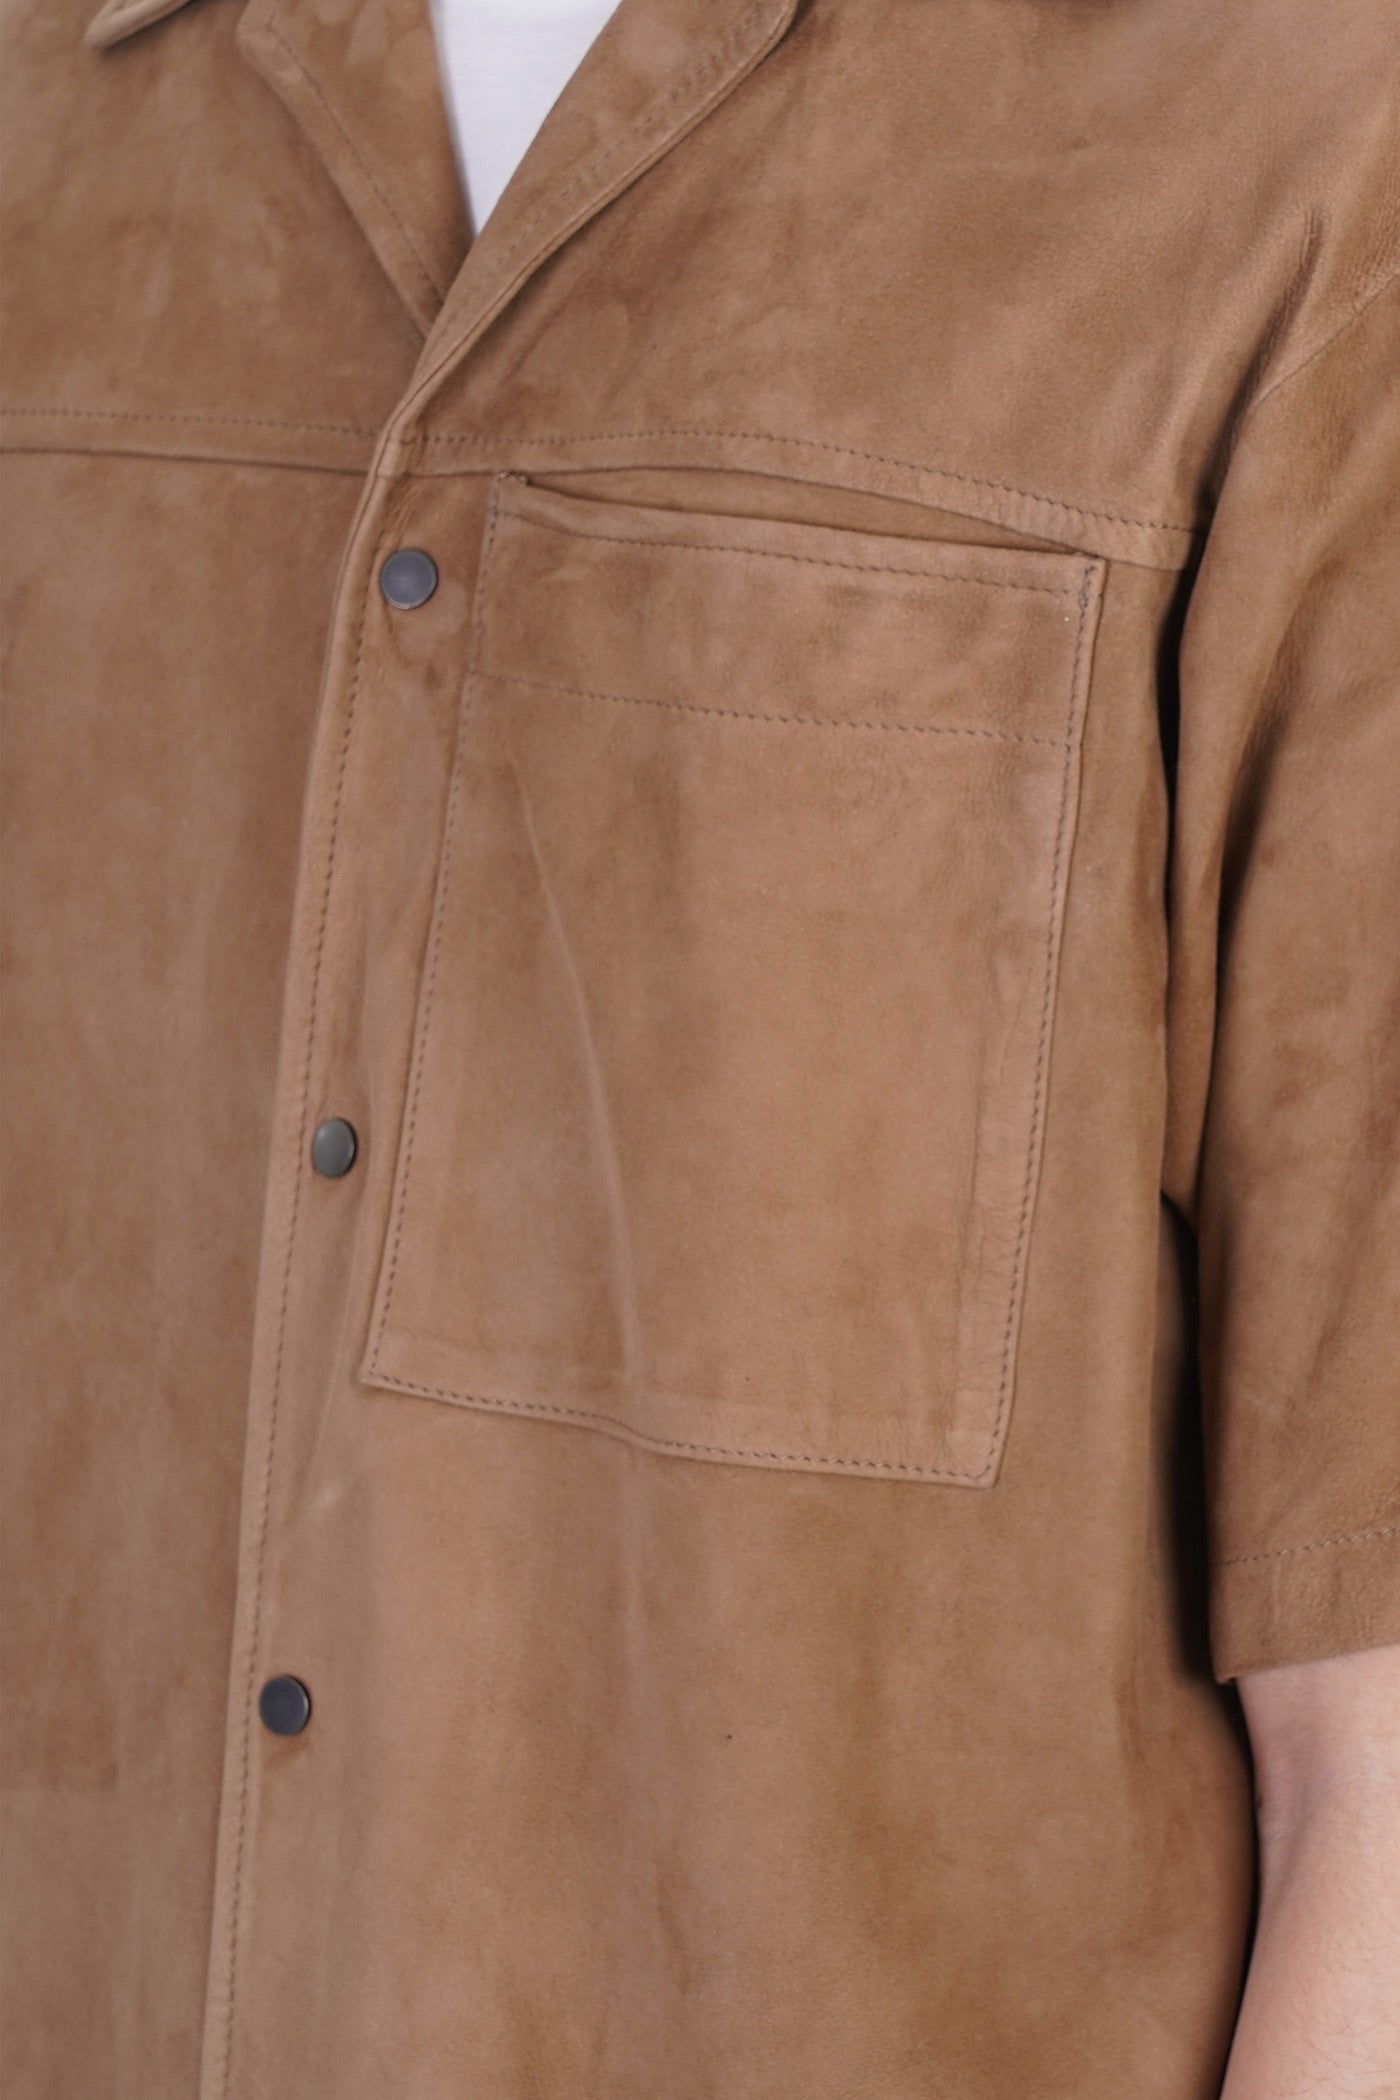 Men’s Half Sleeves Cream Brown Suede Leather Shirt